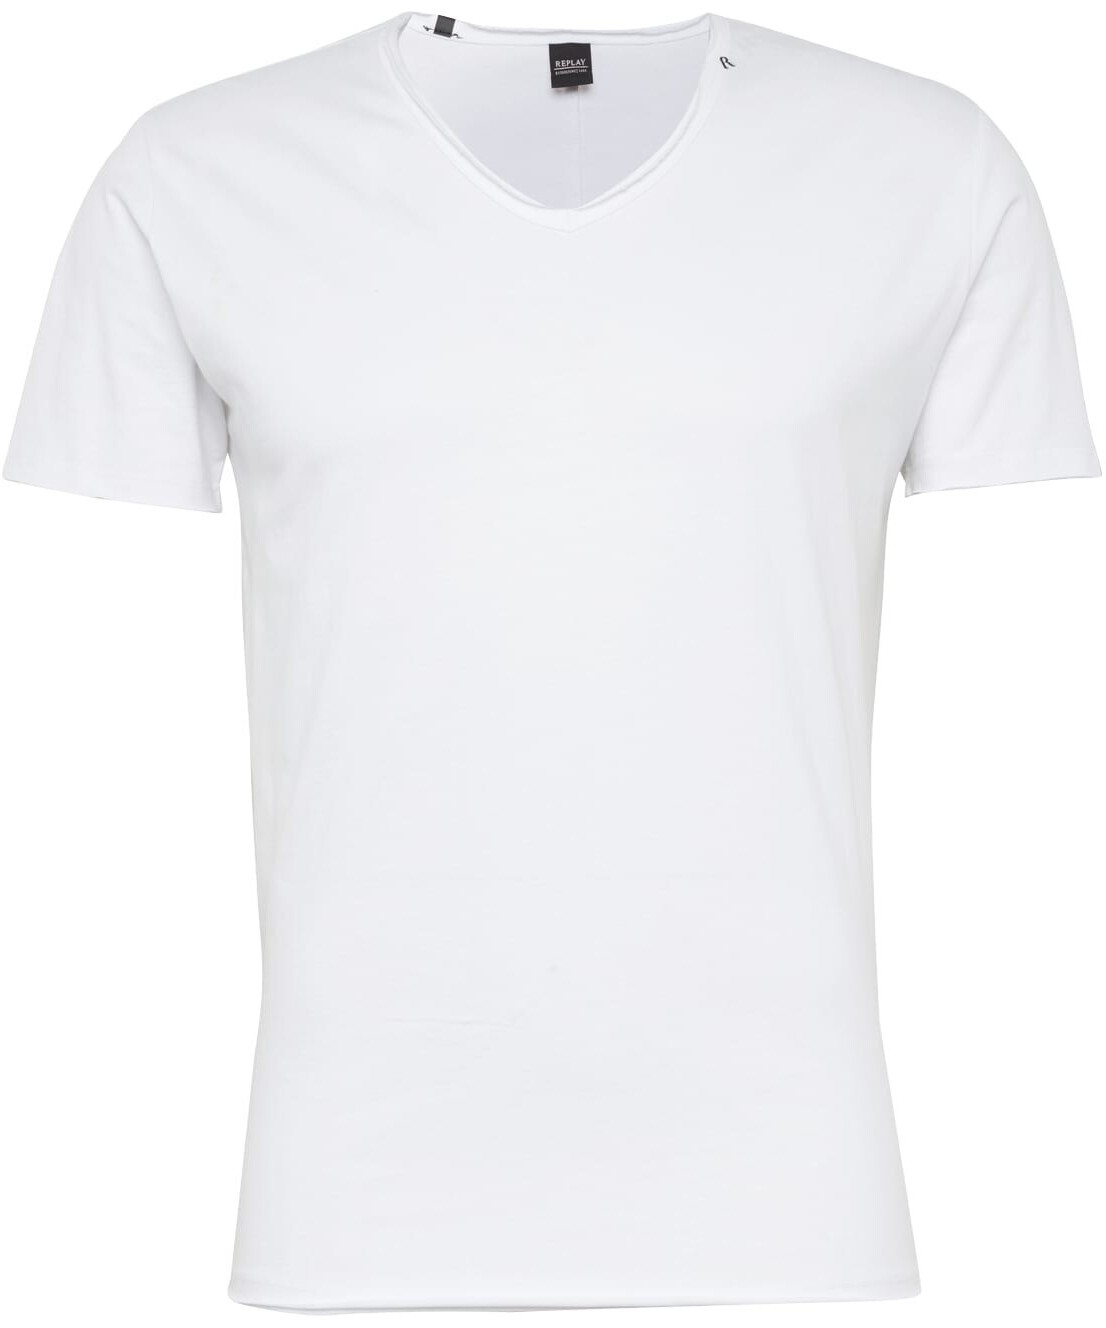 Replay T-Shirt (M3591.000.2660) ab 21,56 € | Preisvergleich bei